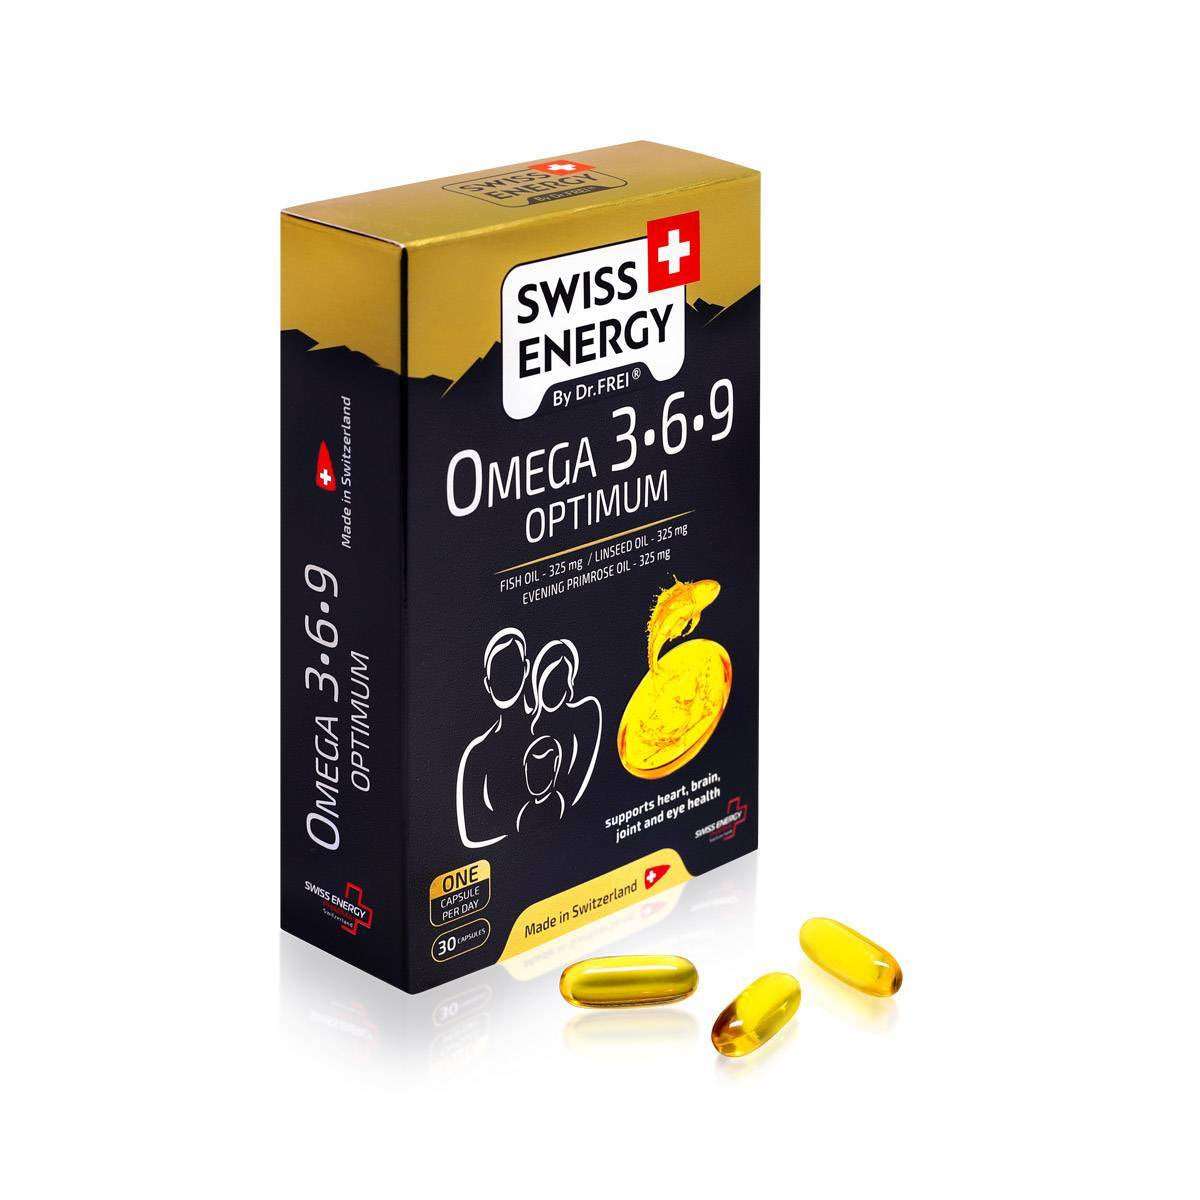 Swiss Energy, Omega-3-6-9 OPTIMUM, balanced omega fatty acid